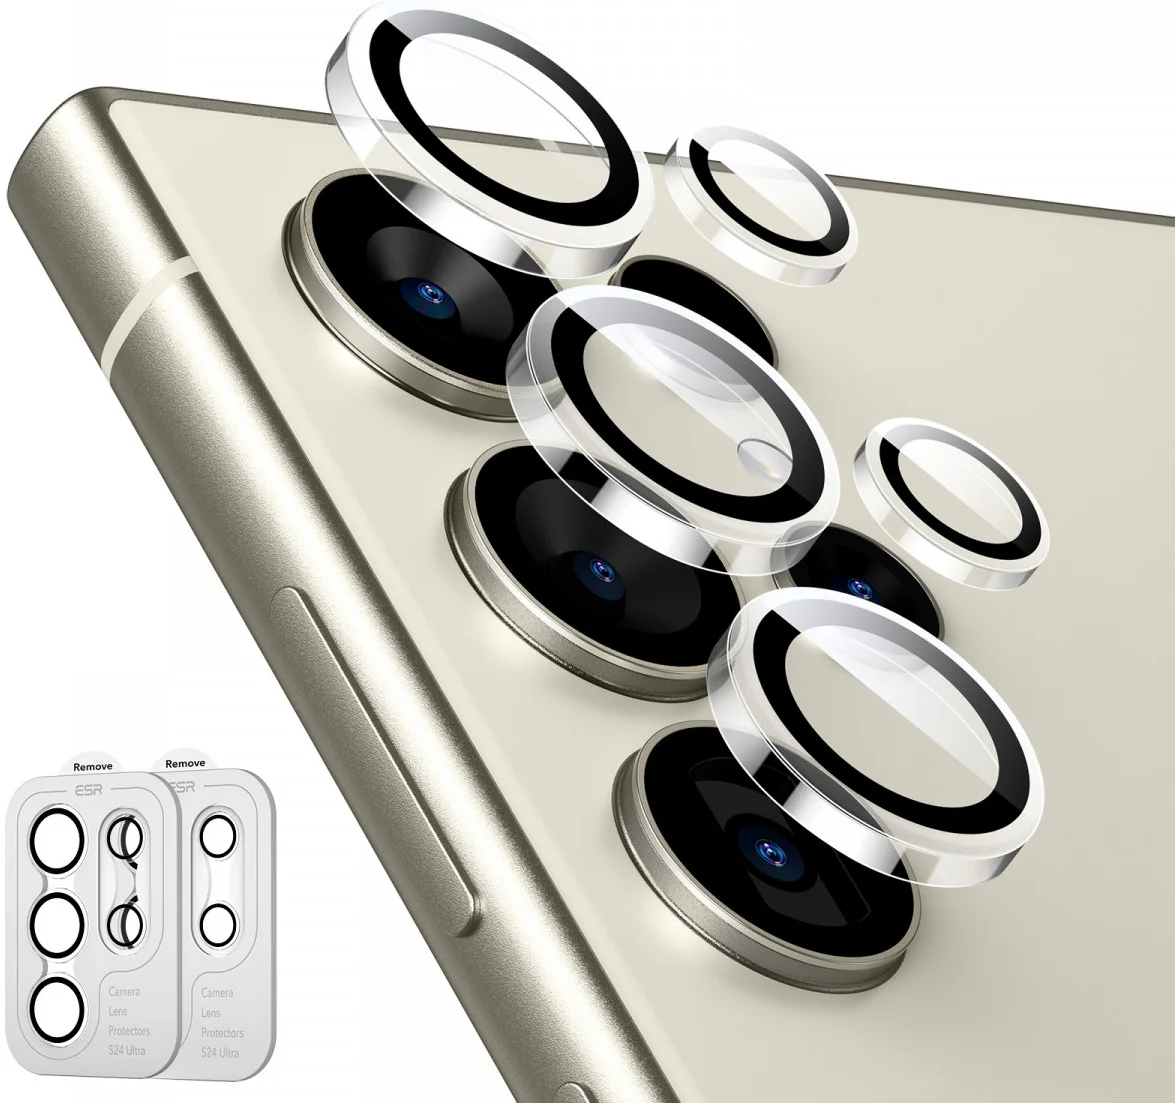 ESR Samsung Galaxy S24 Ultra Camera Lens Protector Transparant 2-Pack